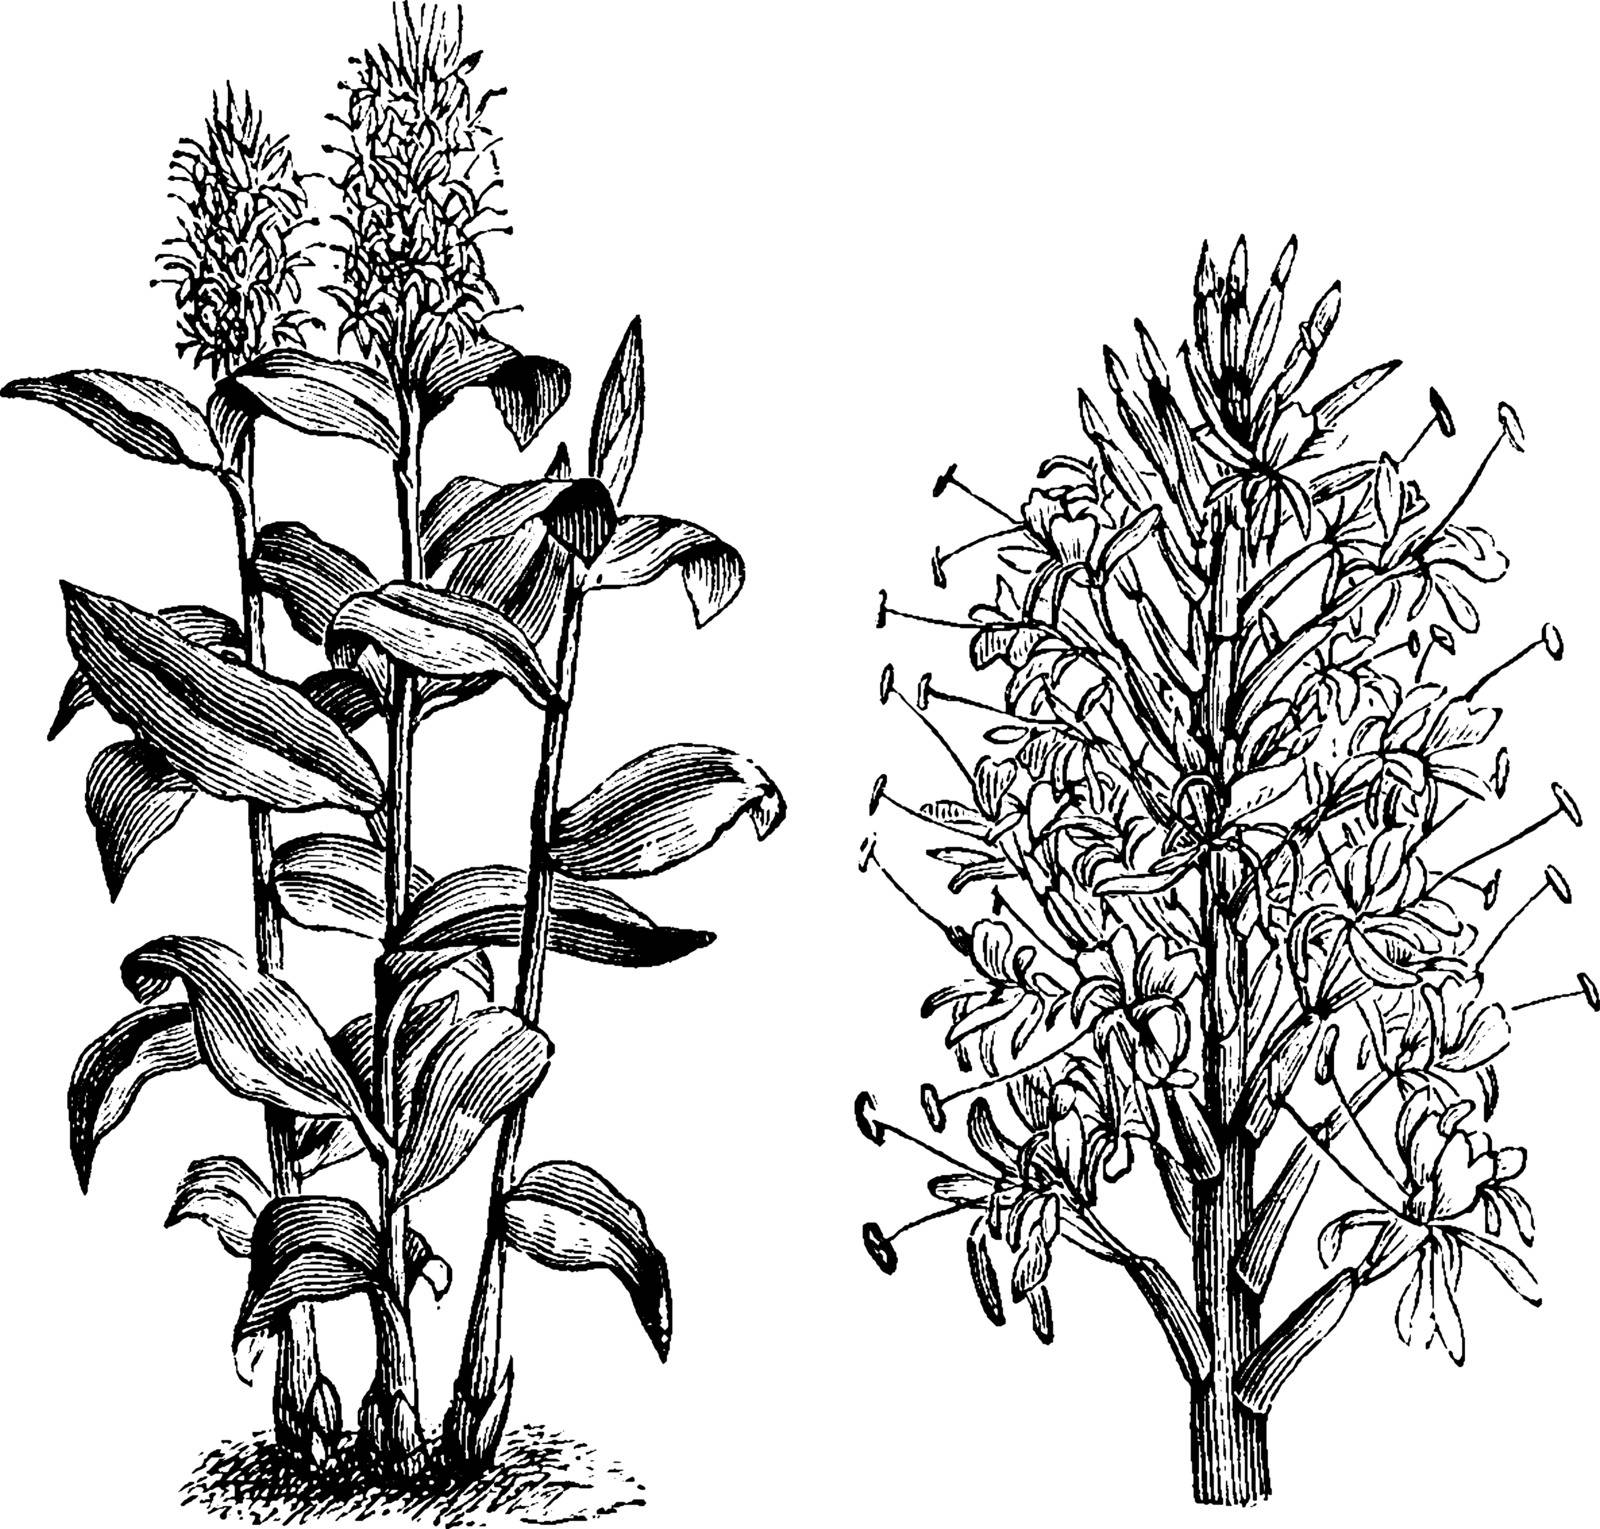 Habit and Detached Flower Spike of Hedychium Gardnerianum vintag by Morphart